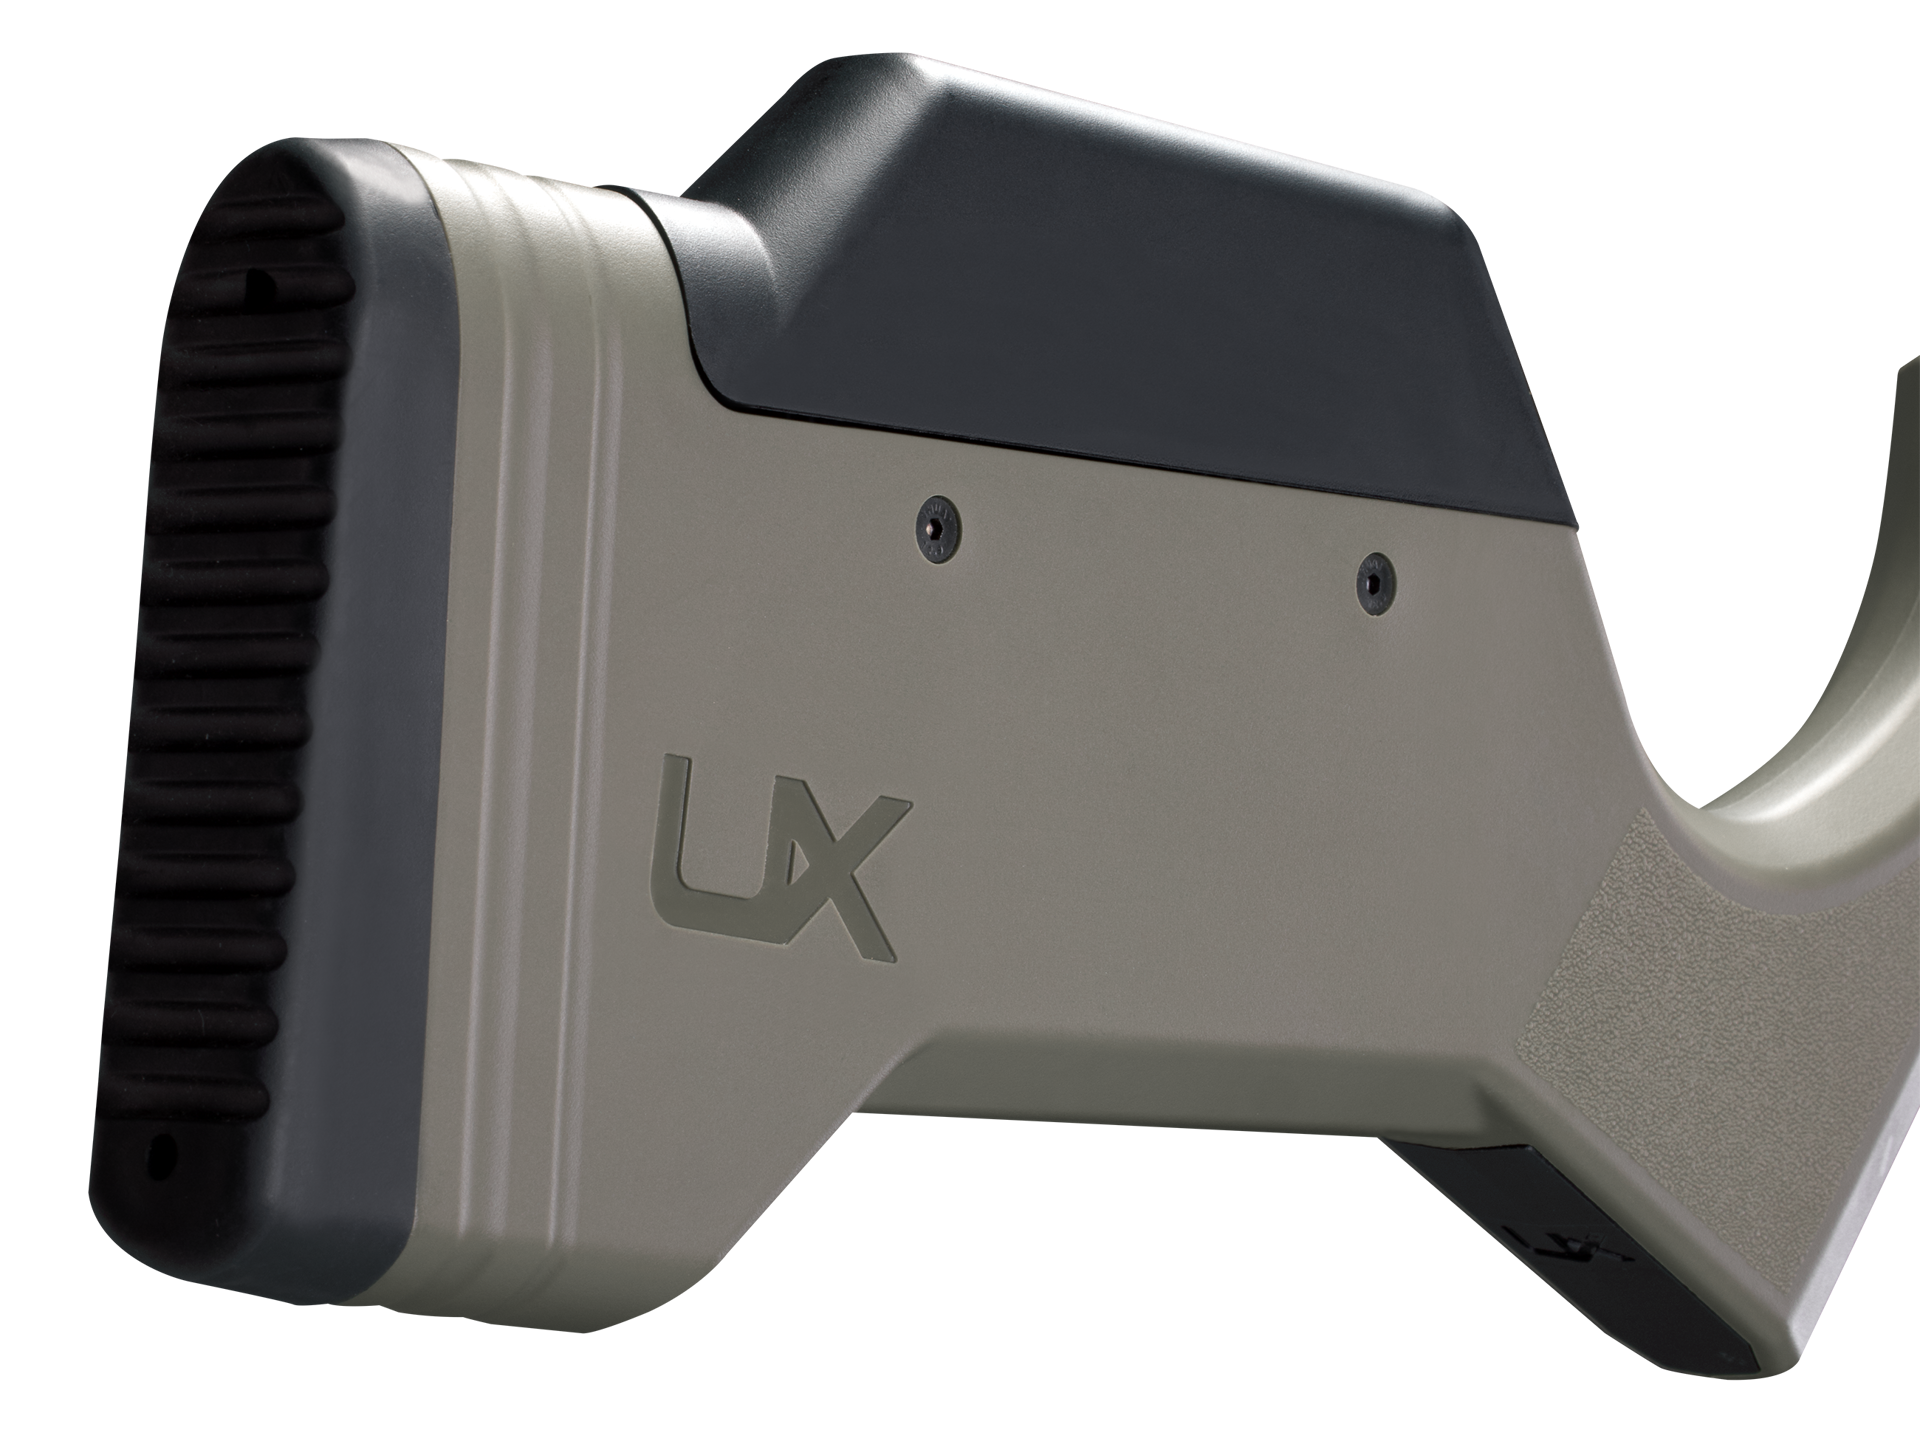 UX EXCLUSIVE (Umarex) PCP Airgun Gauntlet 2 SL